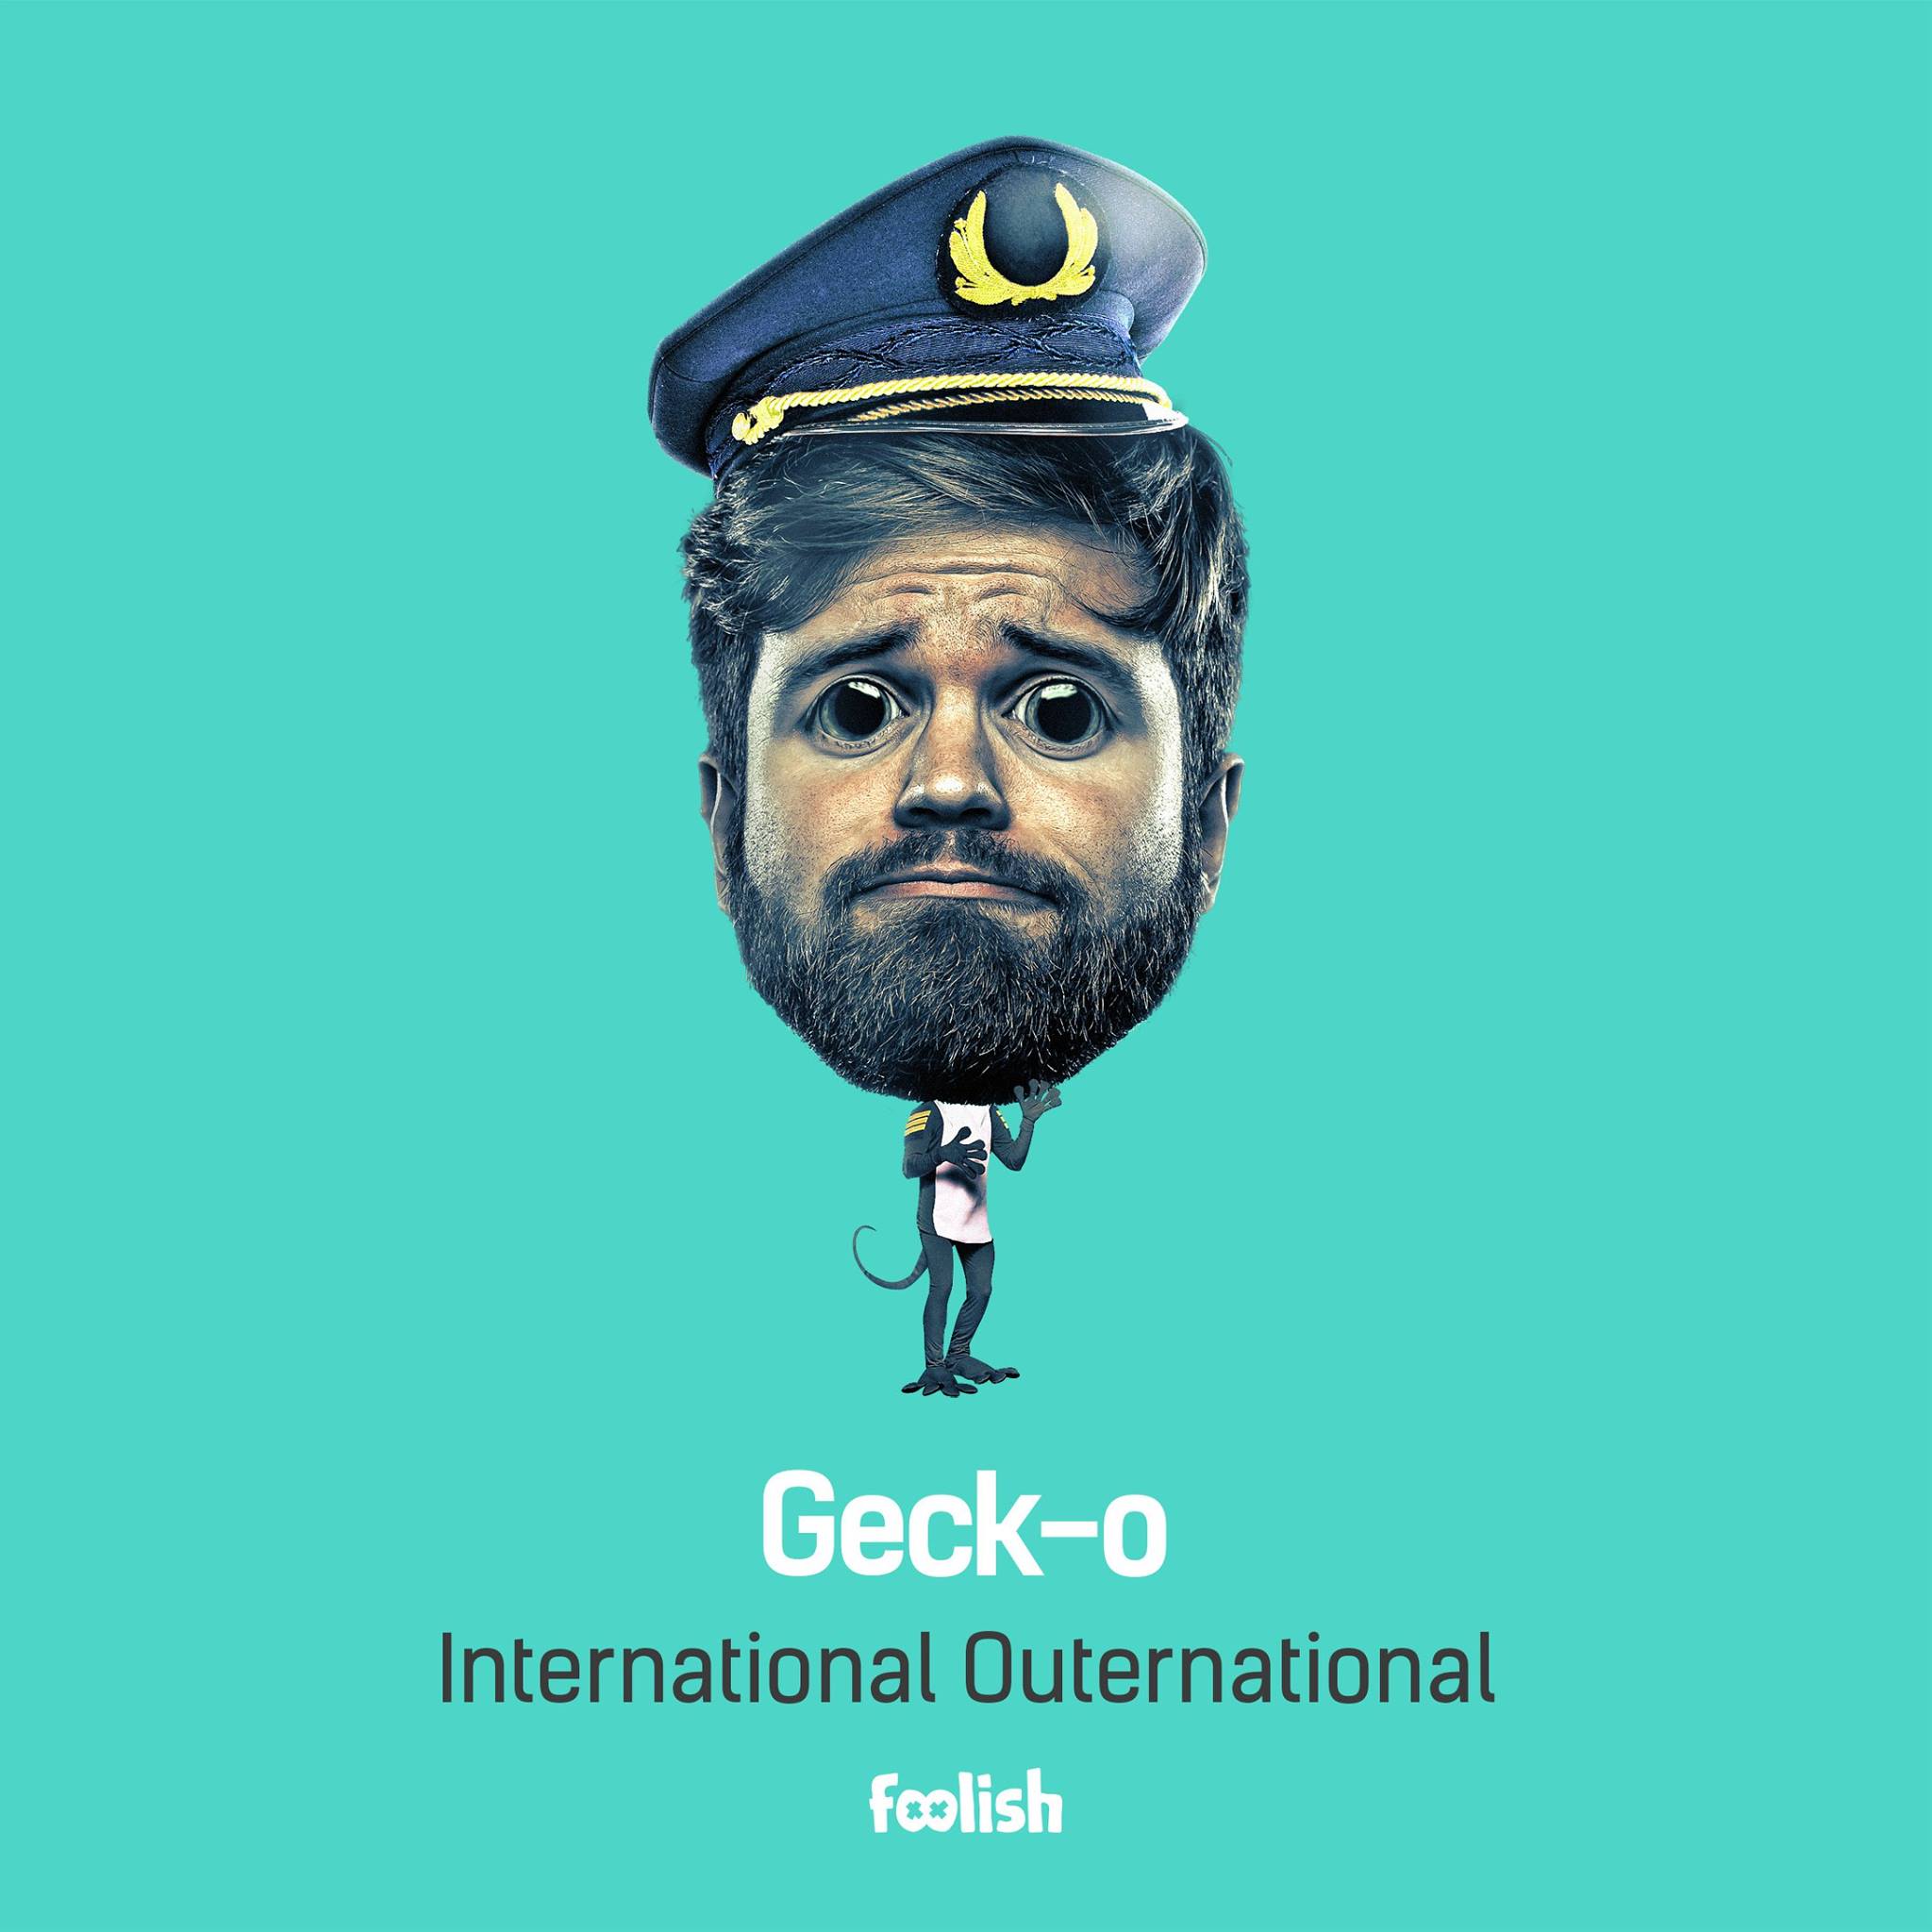 Geck-O - International Outernational [FOOLISH] FLSM022